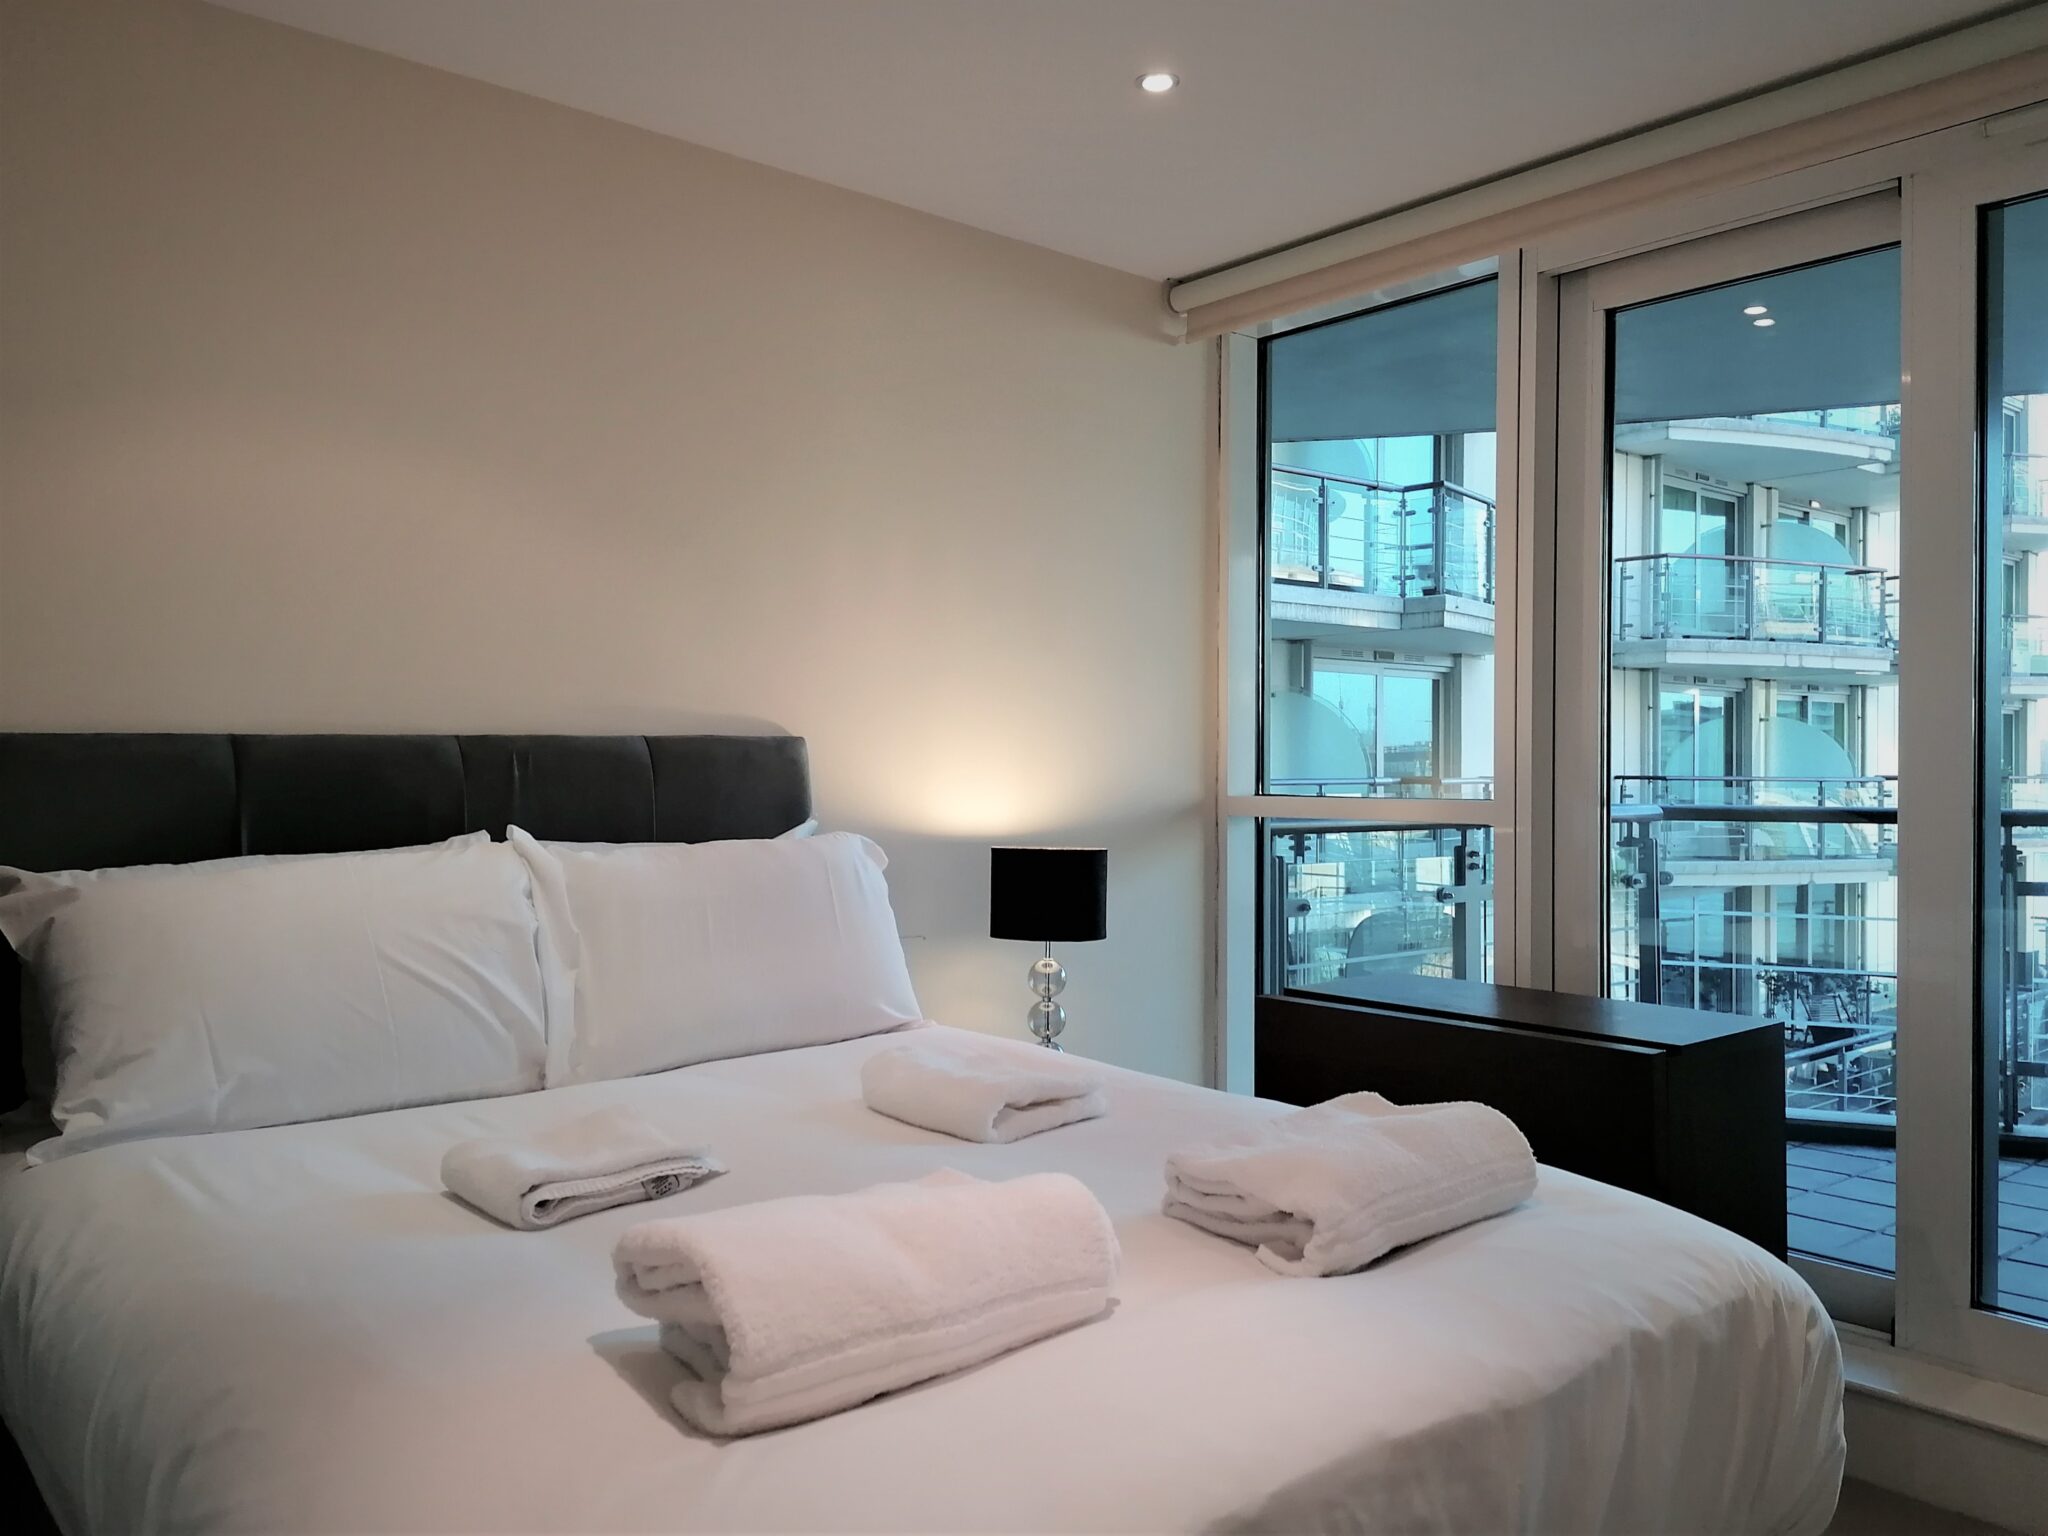 Kings Oak House Apartments - West London Serviced Apartments - London | Urban Stay